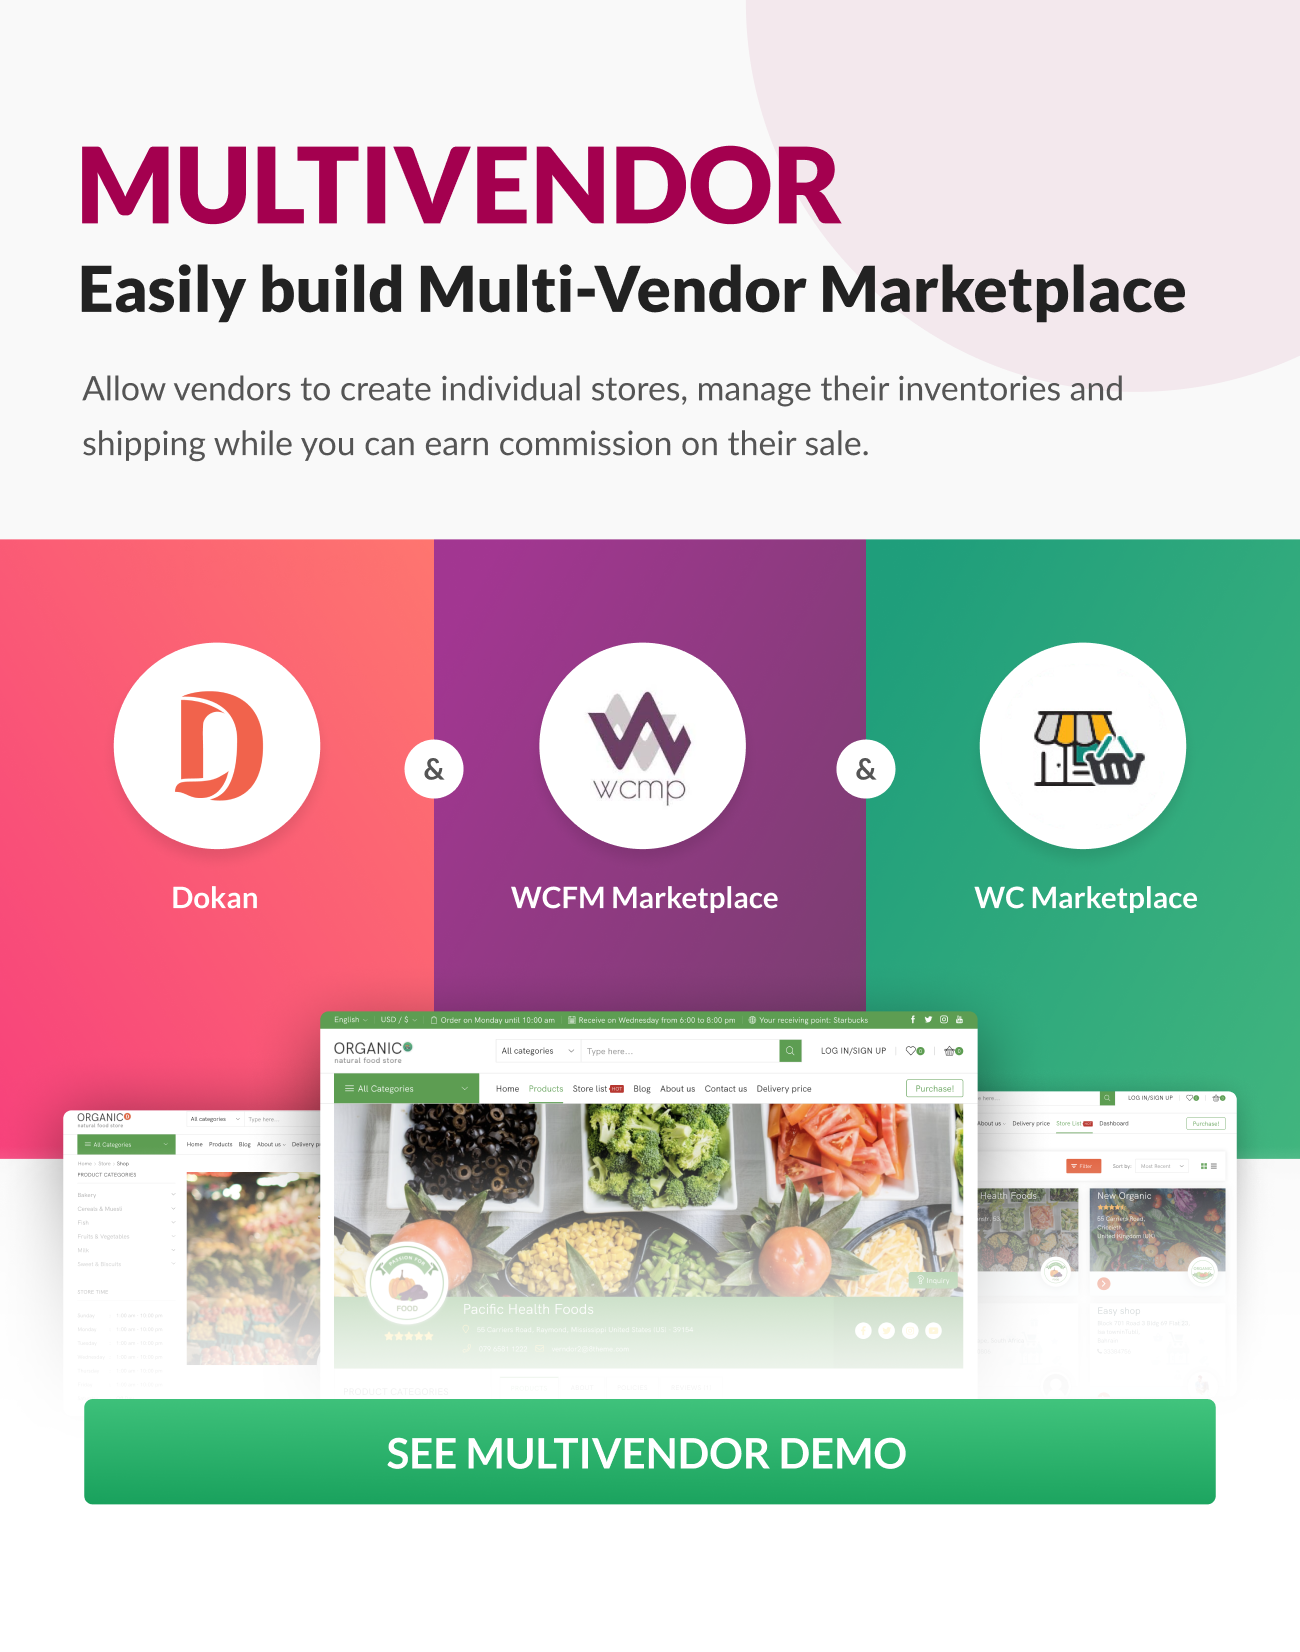 Easily build vendor marketplace.